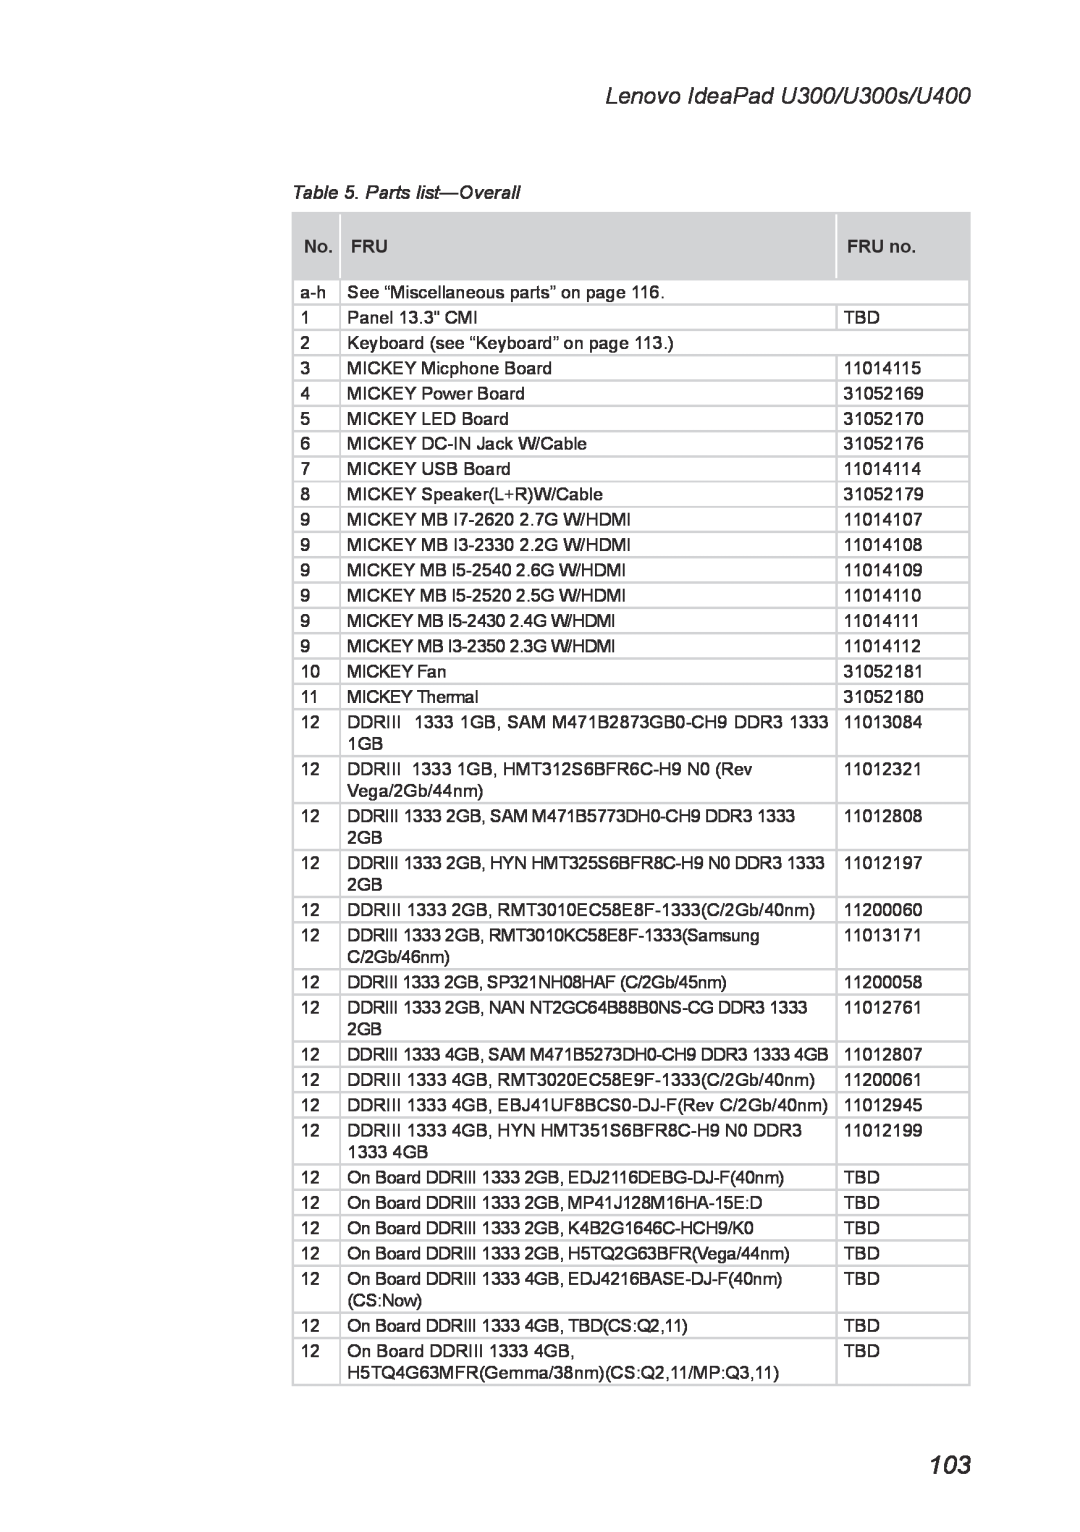 Lenovo U300S manual Parts list-Overall, Lenovo IdeaPad U300/U300s/U400, No. FRU, FRU no 